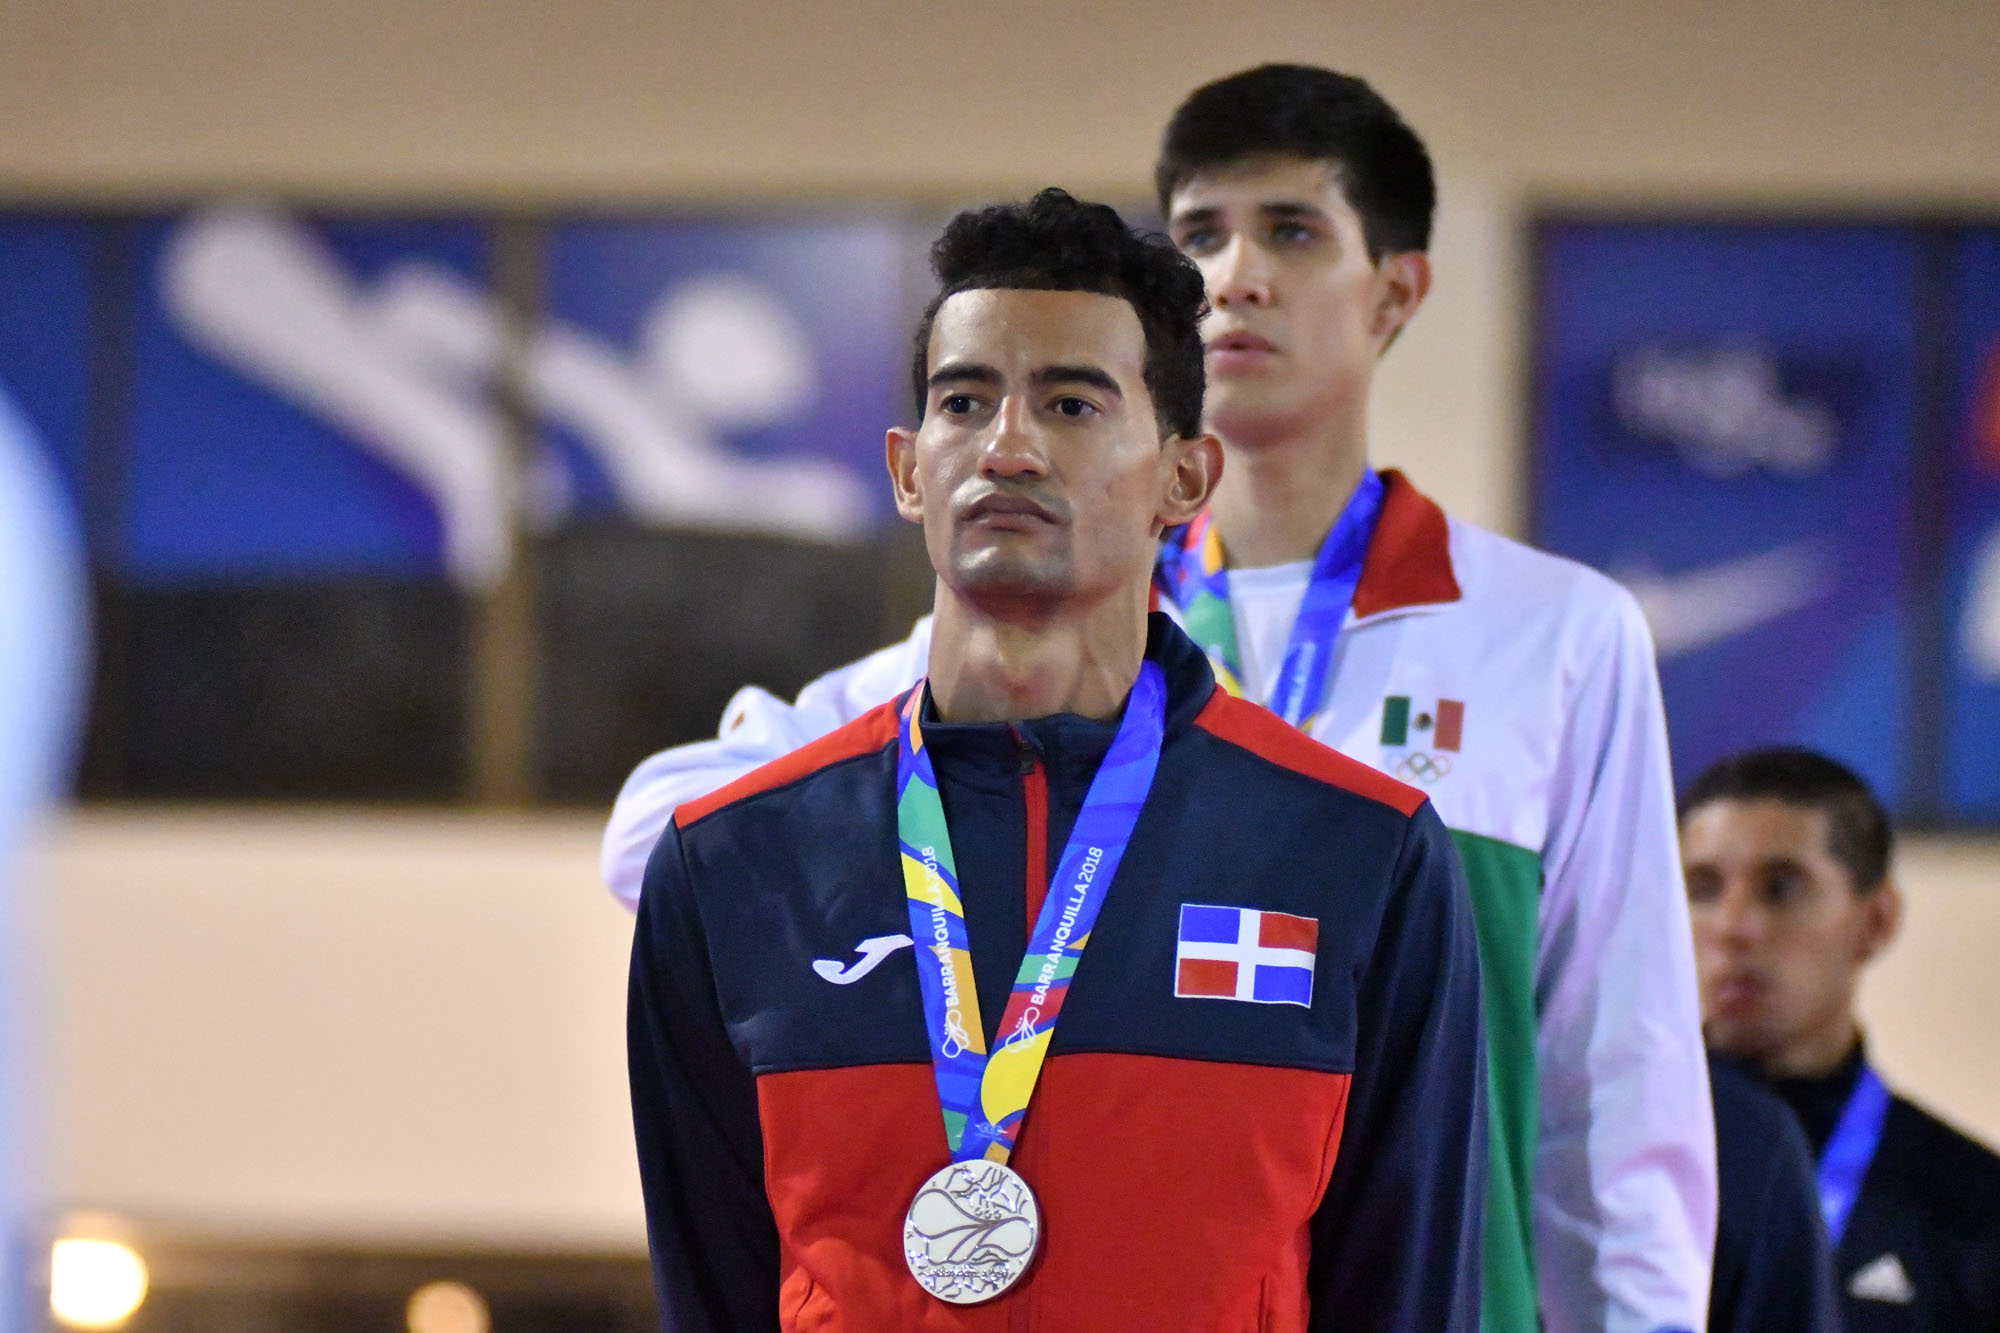 En taekwondo, Edward Espinosa entregó medalla de plata en la división de 54 kilogramos.